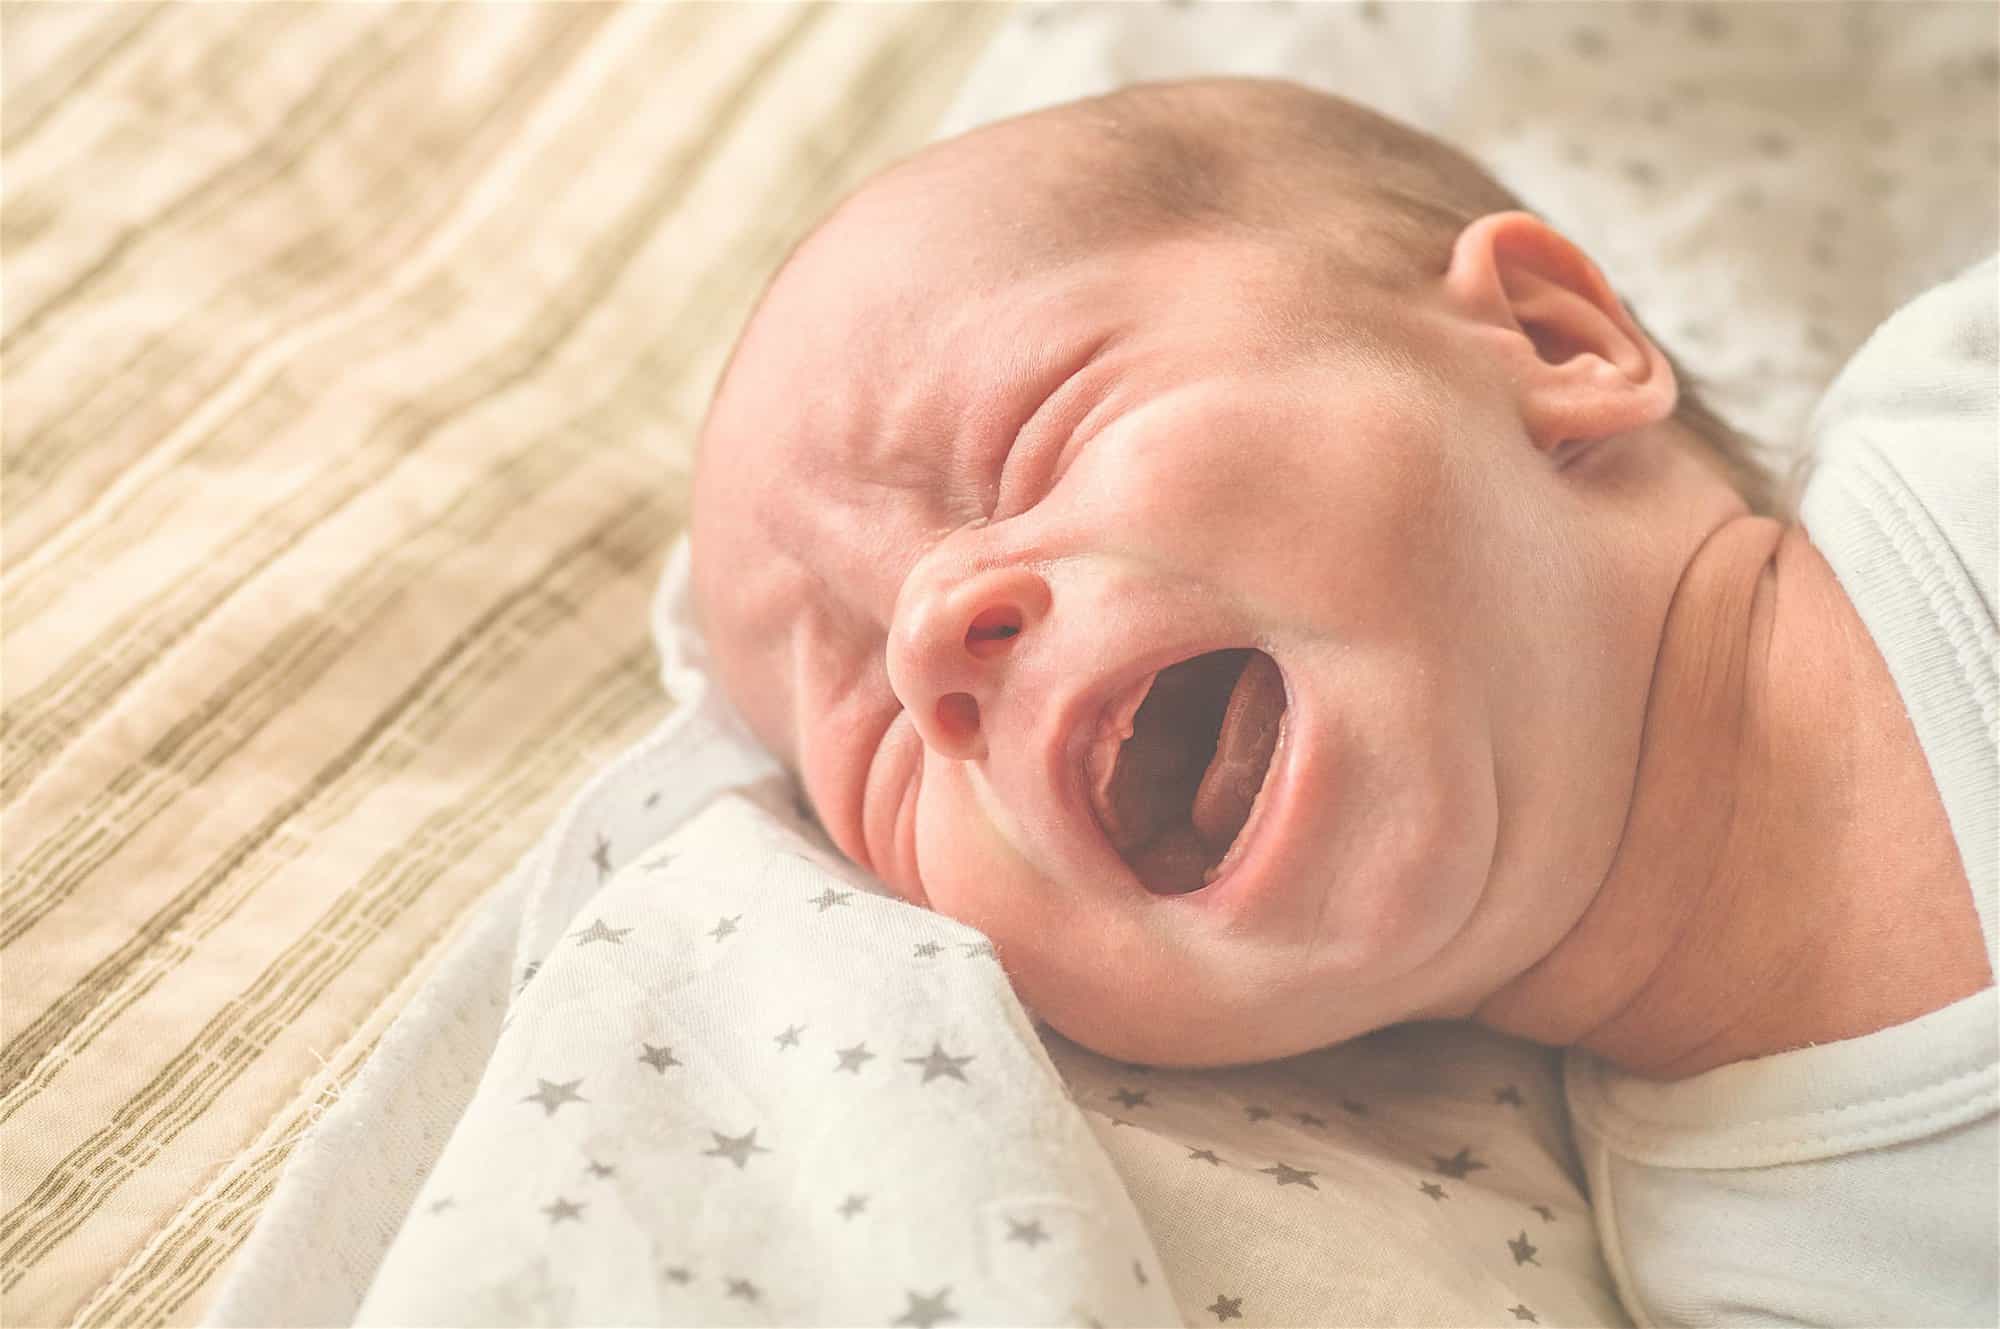 Primer llanto del recién nacido - Criar con Sentido Común. respiración